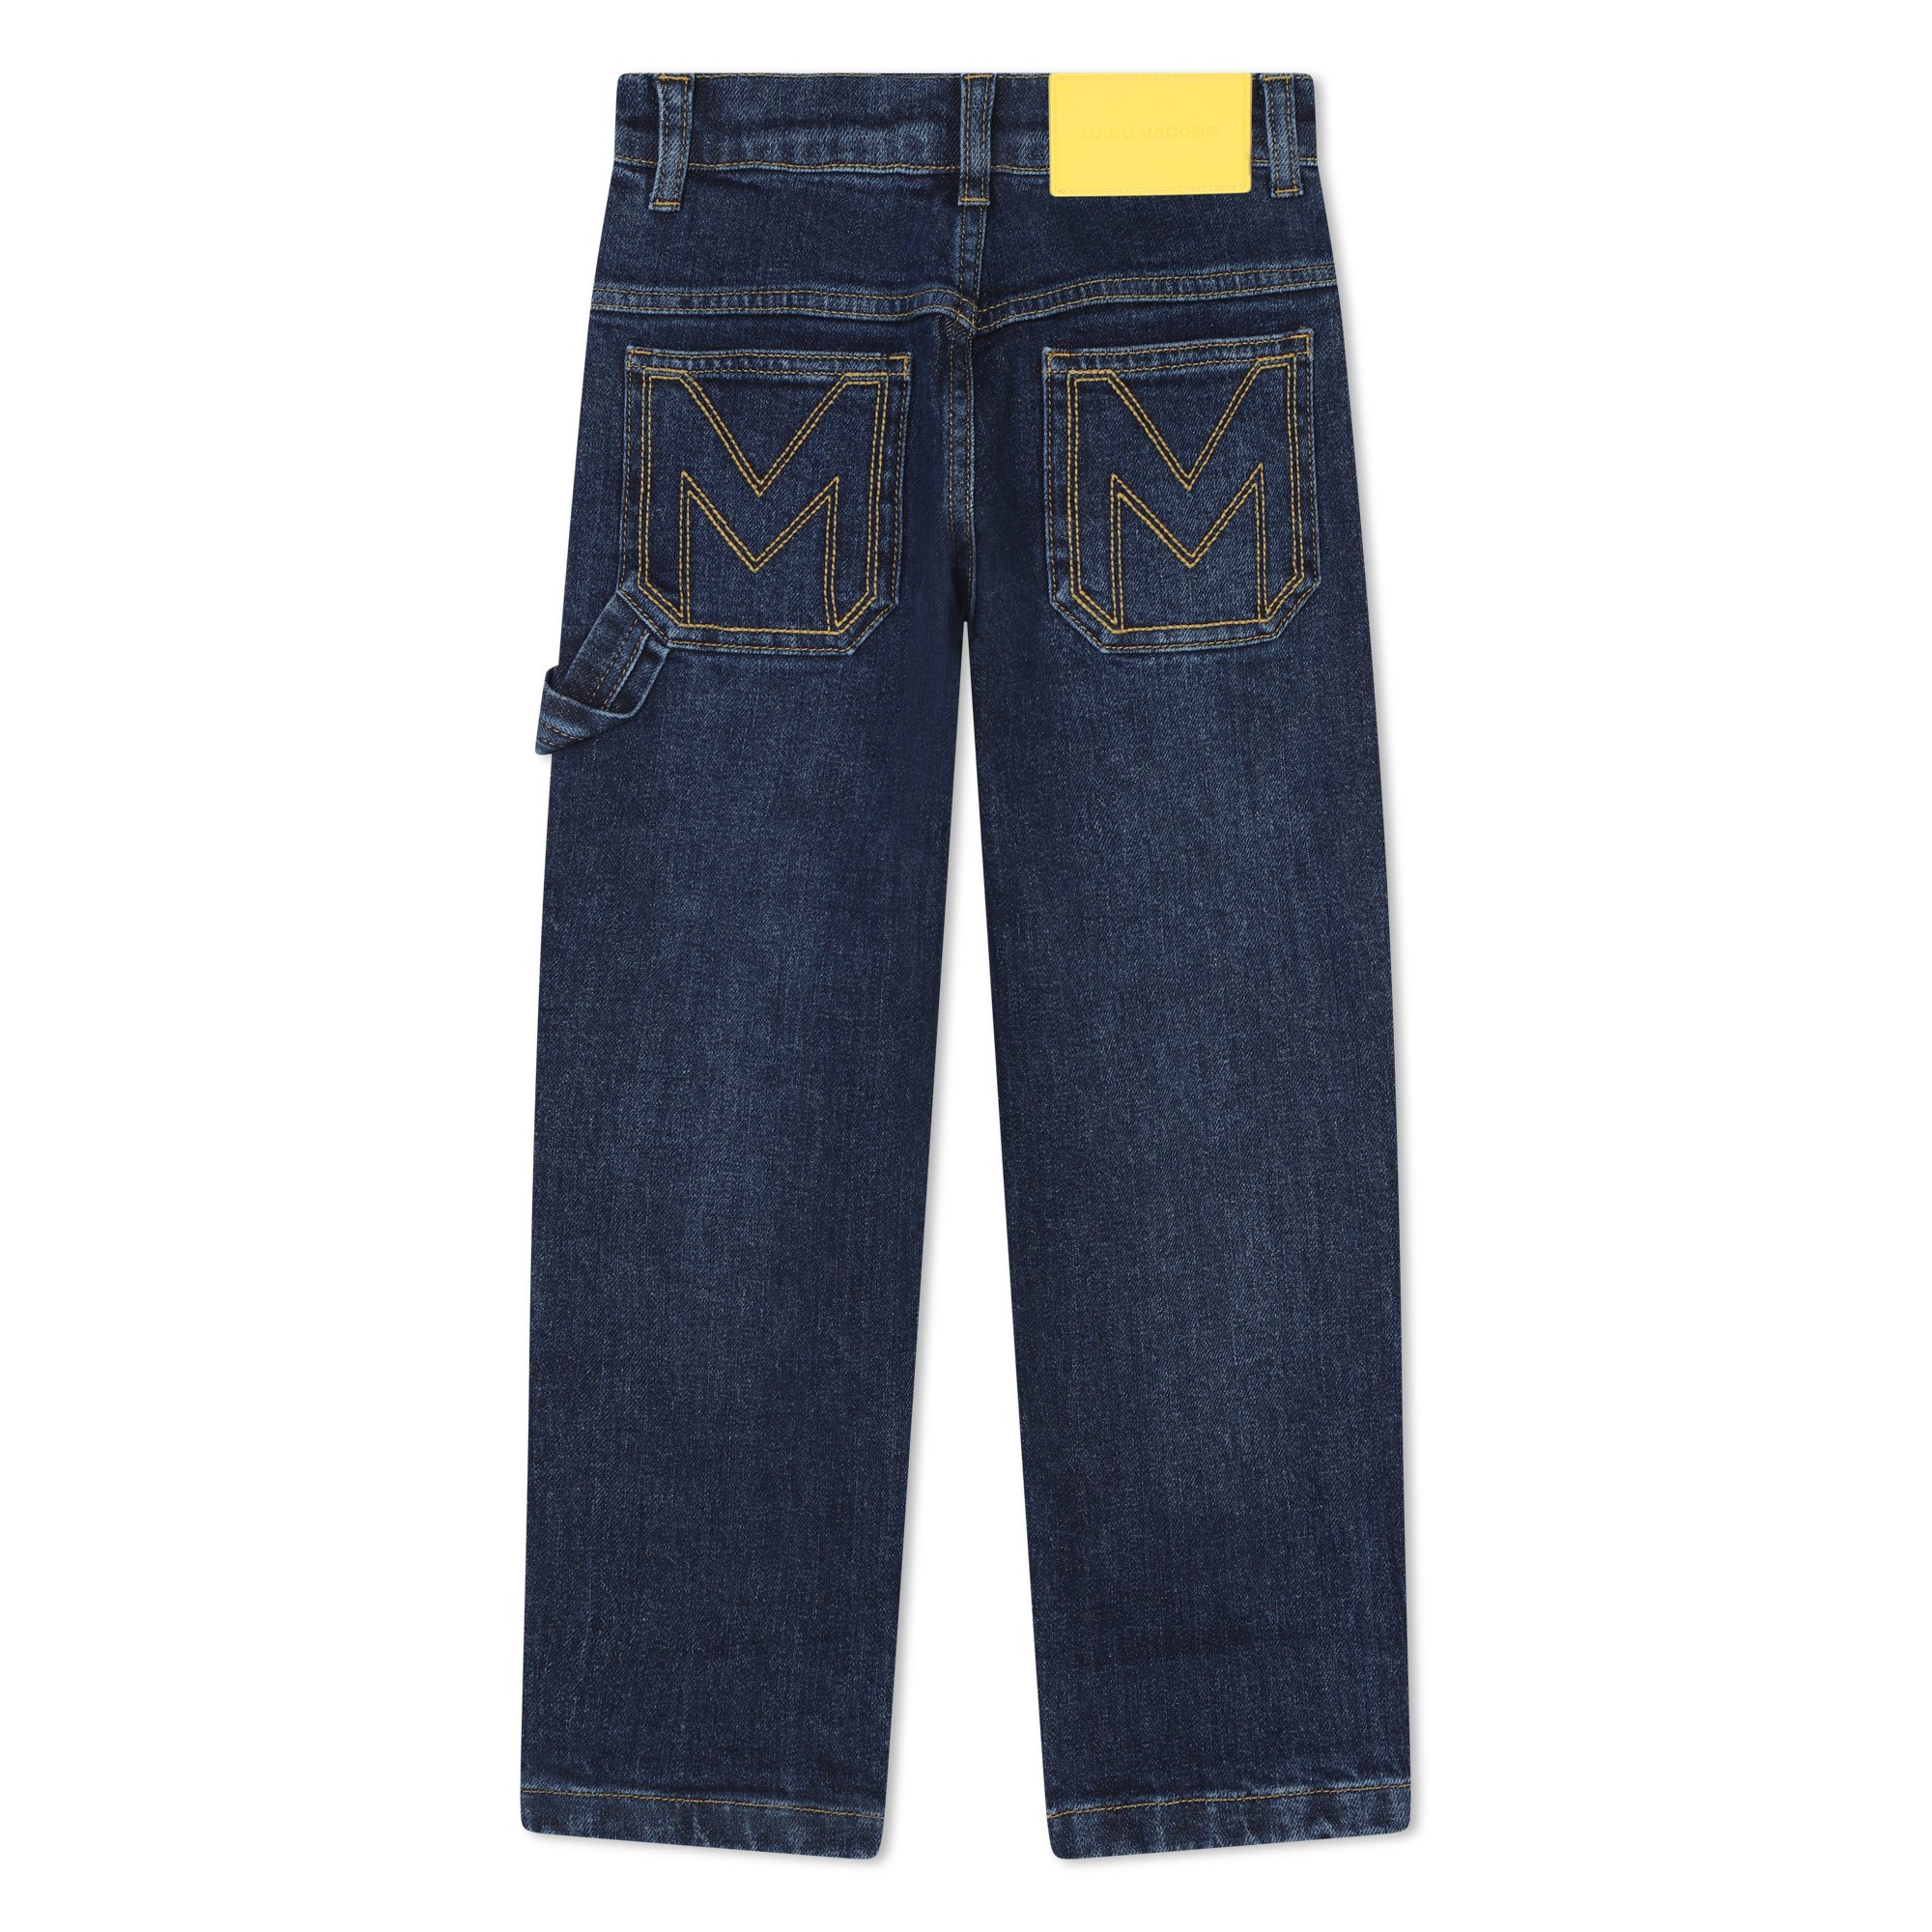 Cotton jeans MARC JACOBS for BOY